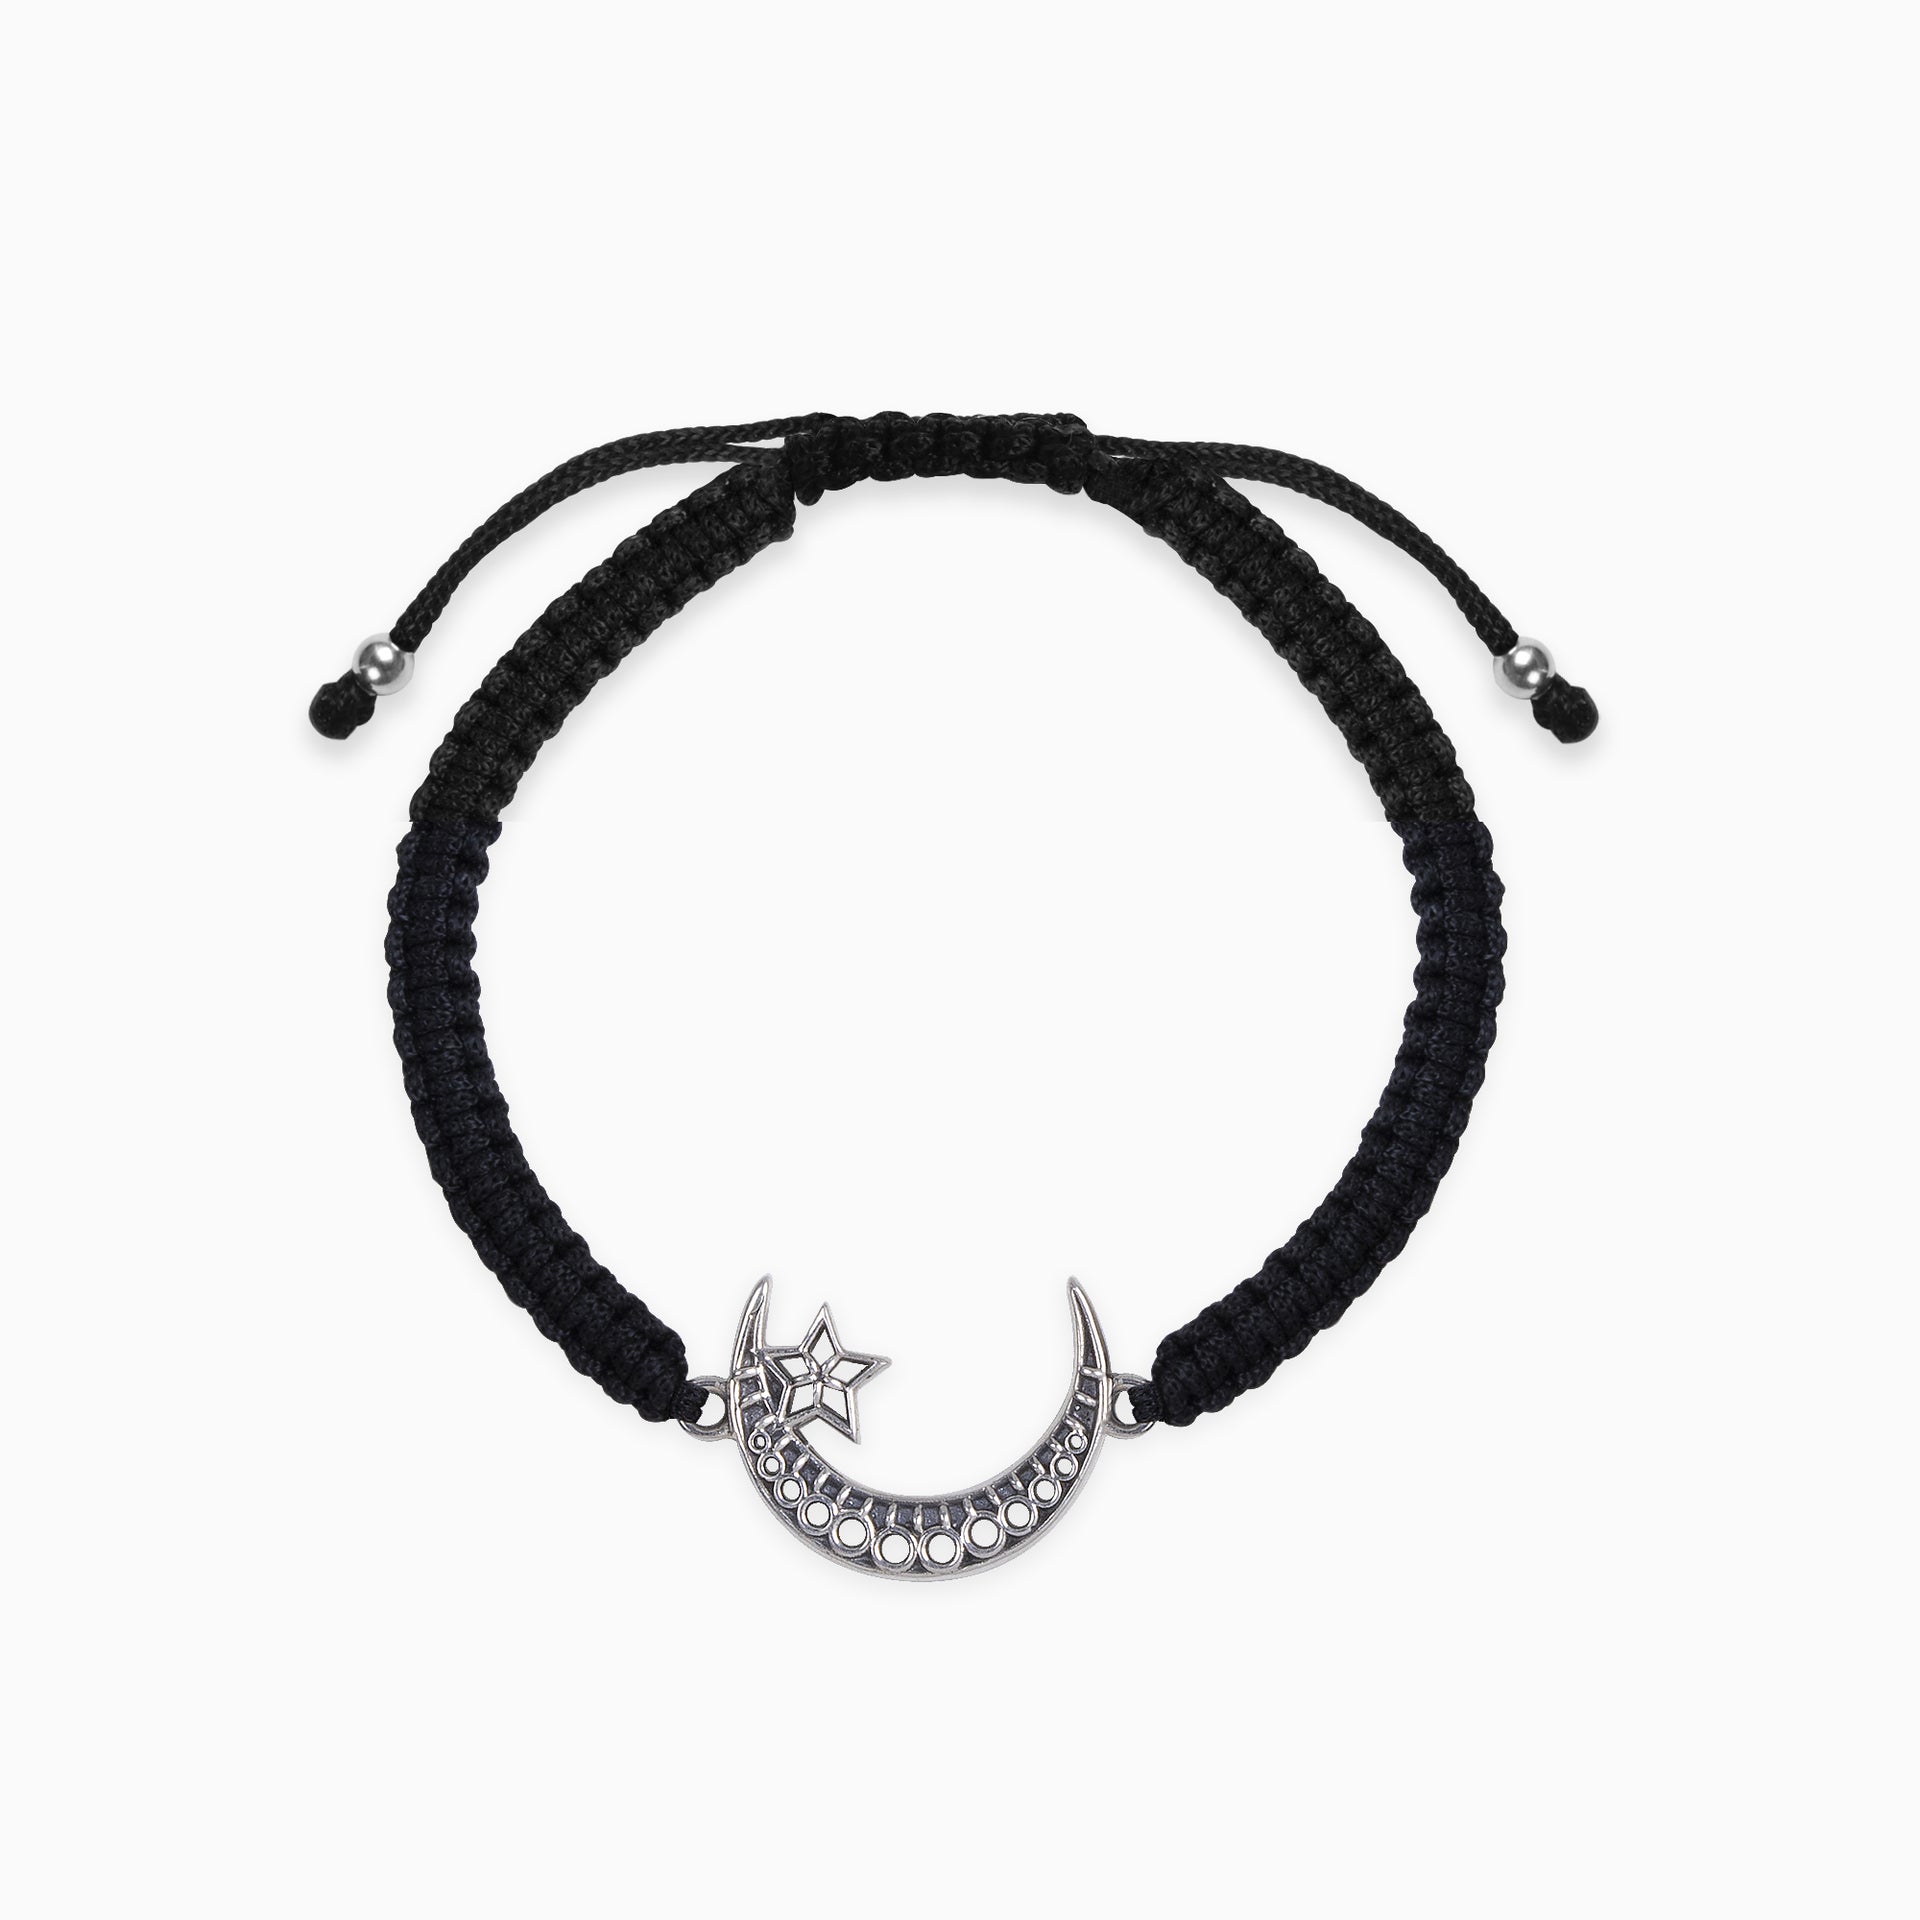 Luna Black Tourmaline Mala Wrap Bracelet with Crescent Moon, Gold or Silver Silver / X-Small - 6.5